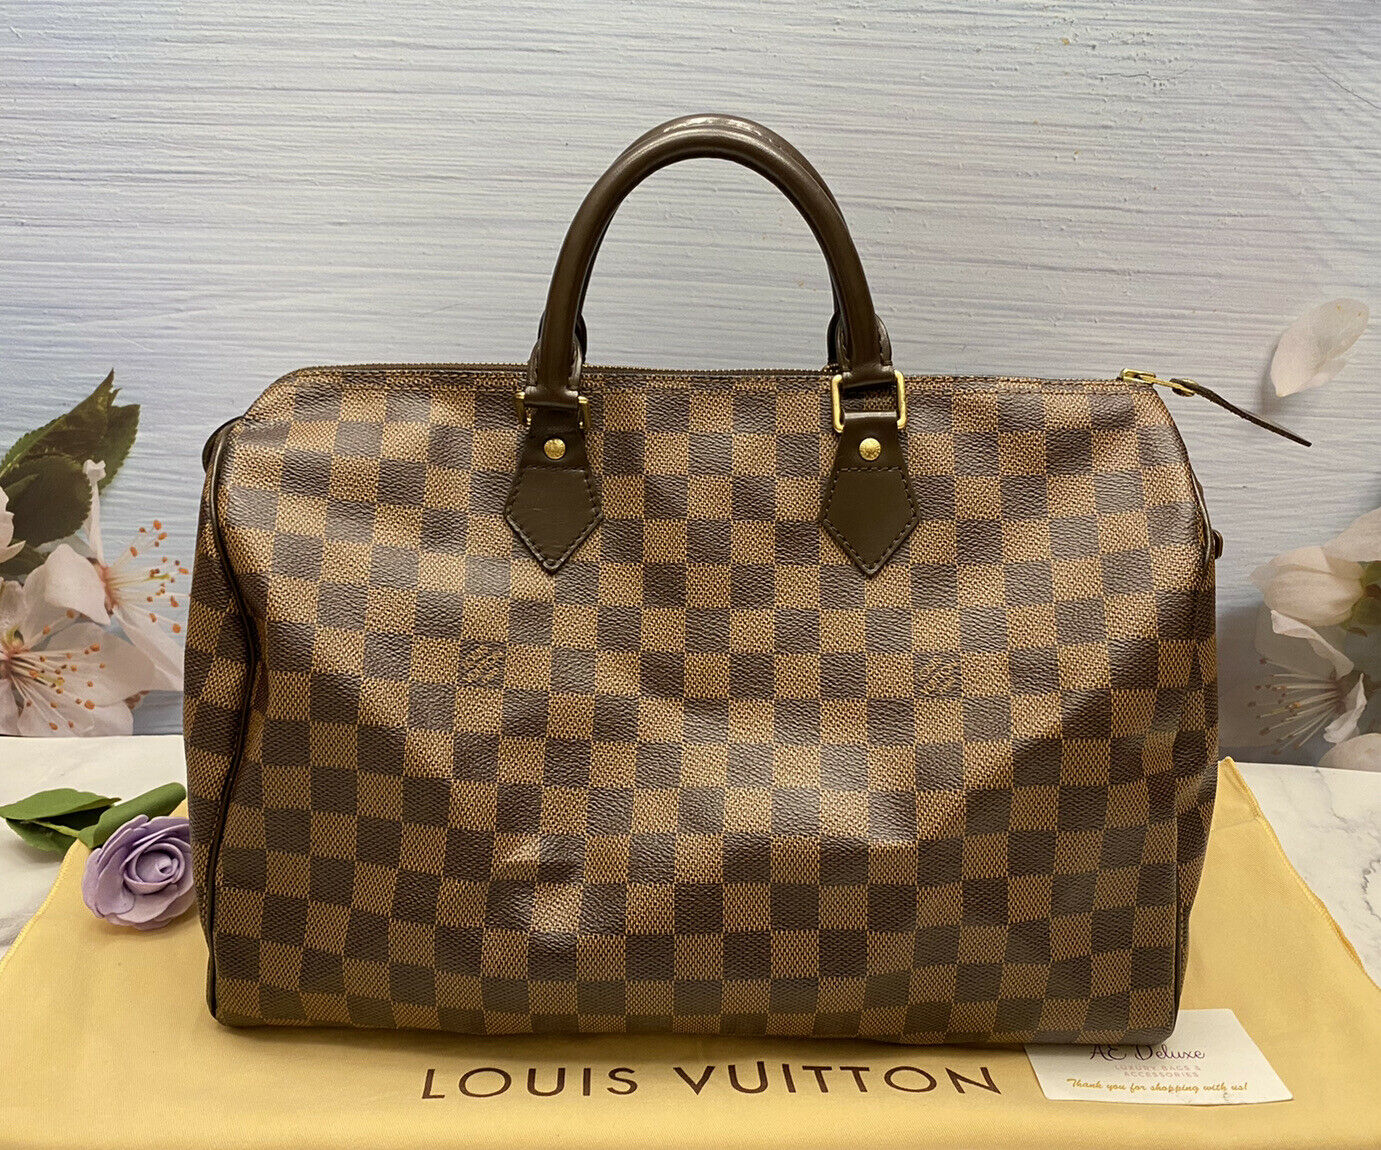 Authentic Louis Vuitton Speedy 35 Damier Ebene Handbag - The ICT